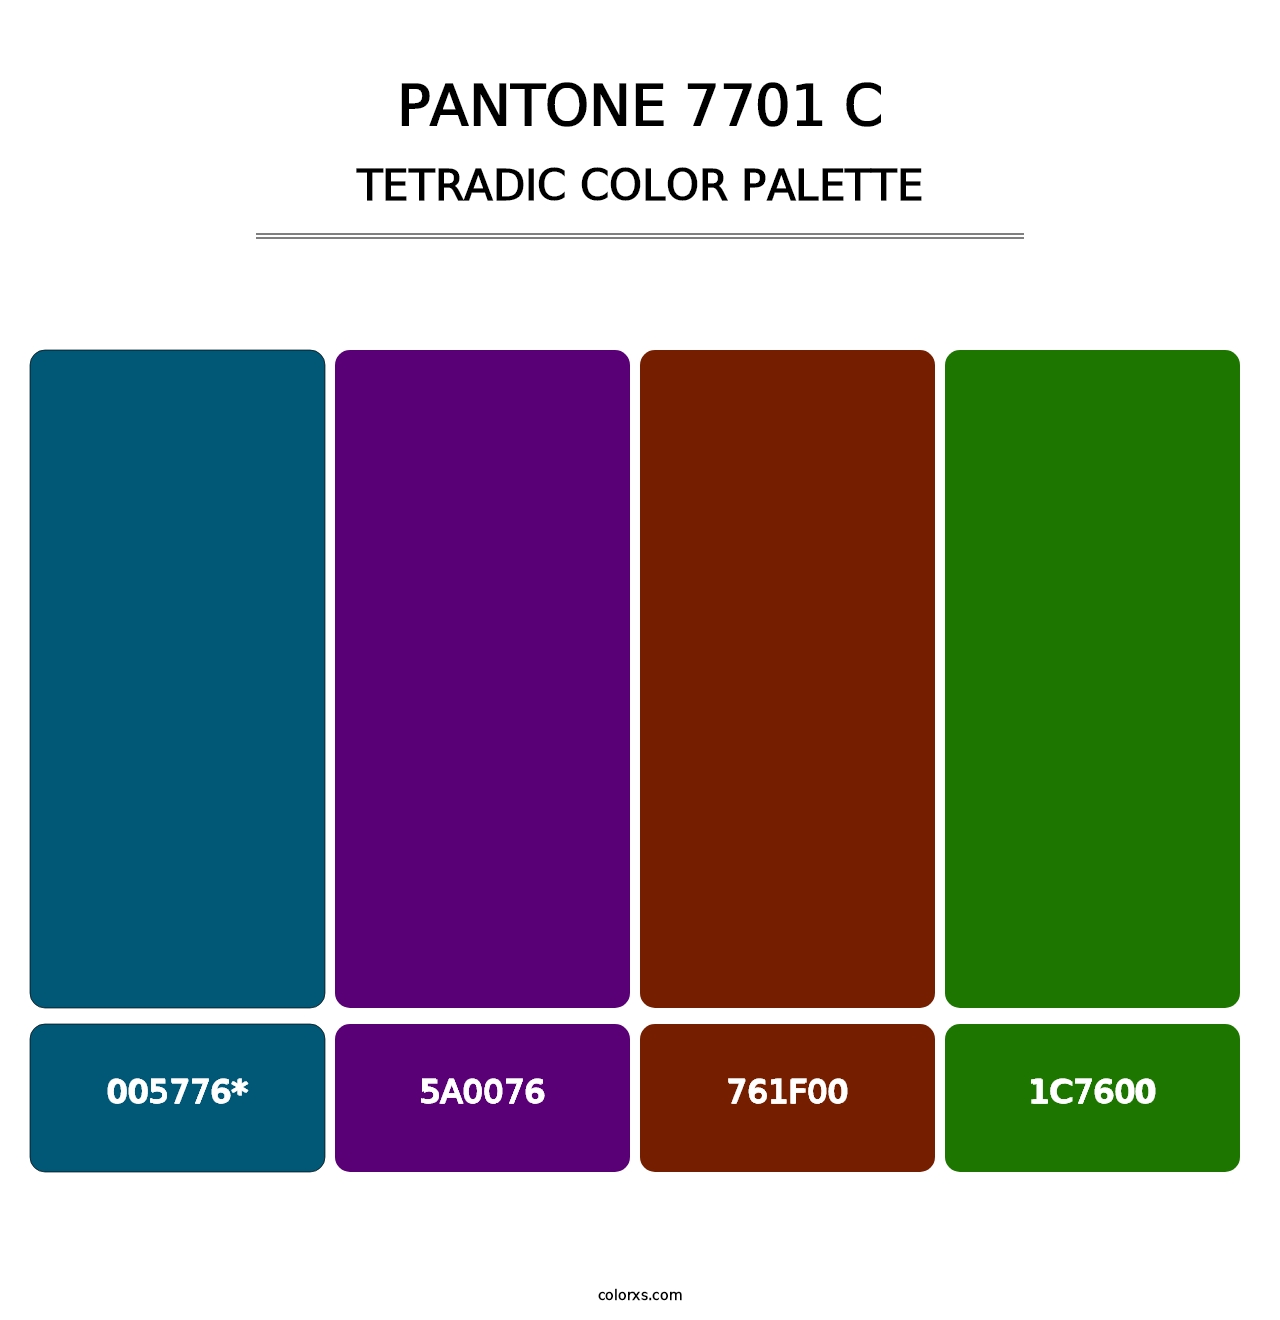 PANTONE 7701 C - Tetradic Color Palette